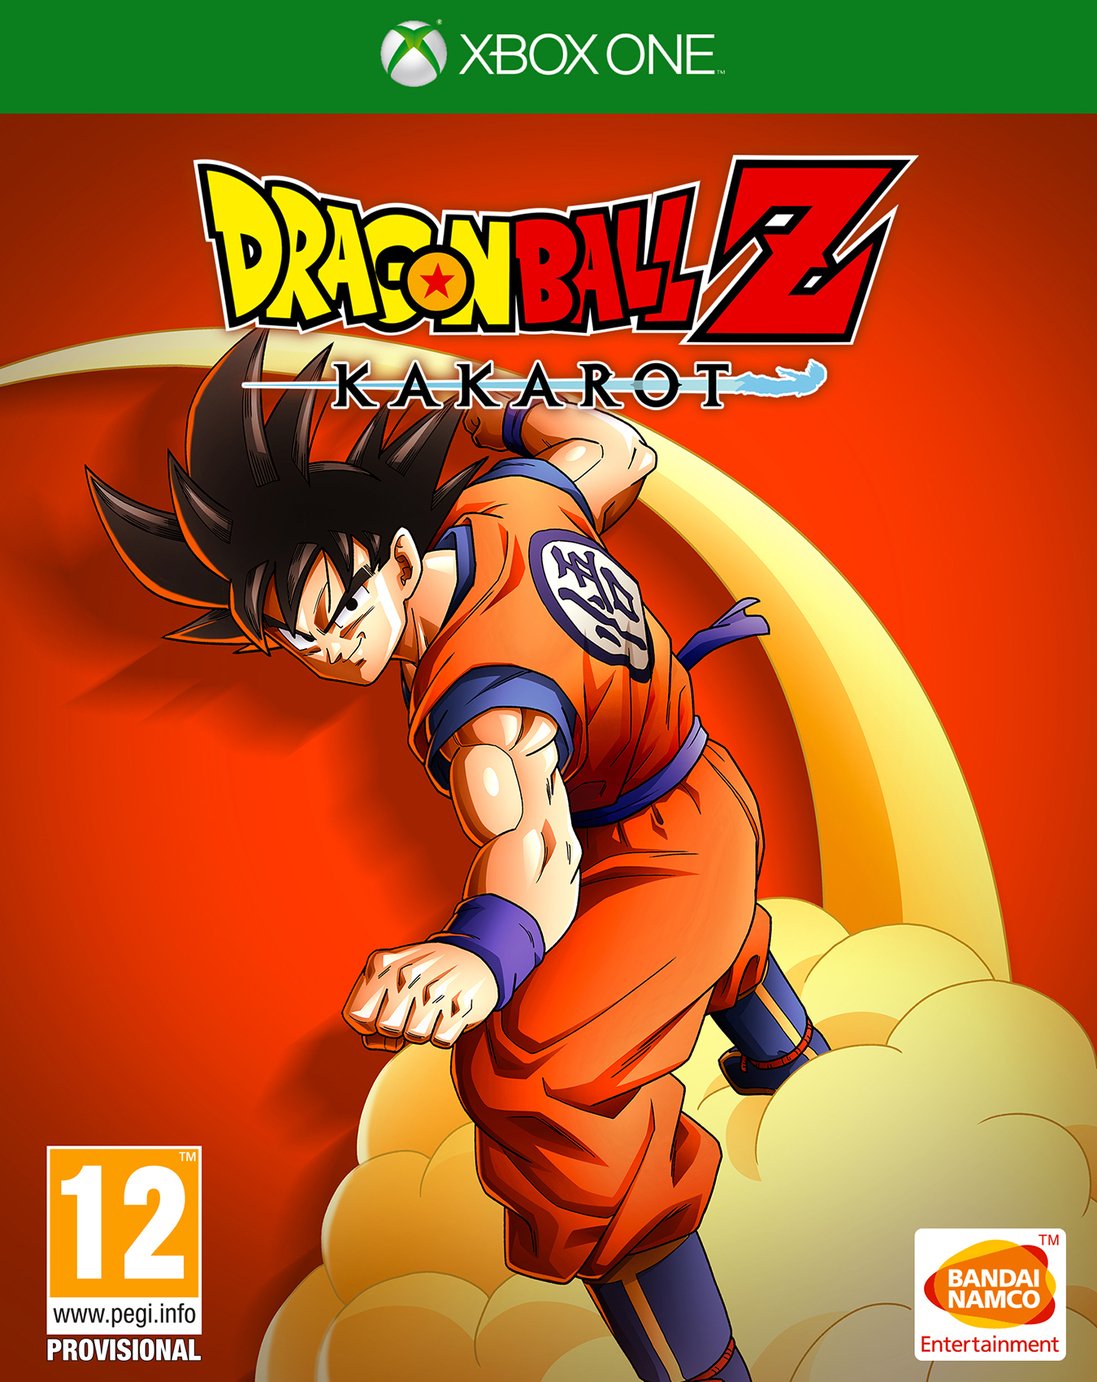 Dragon Ball Z: Kakarot Xbox One Game Review